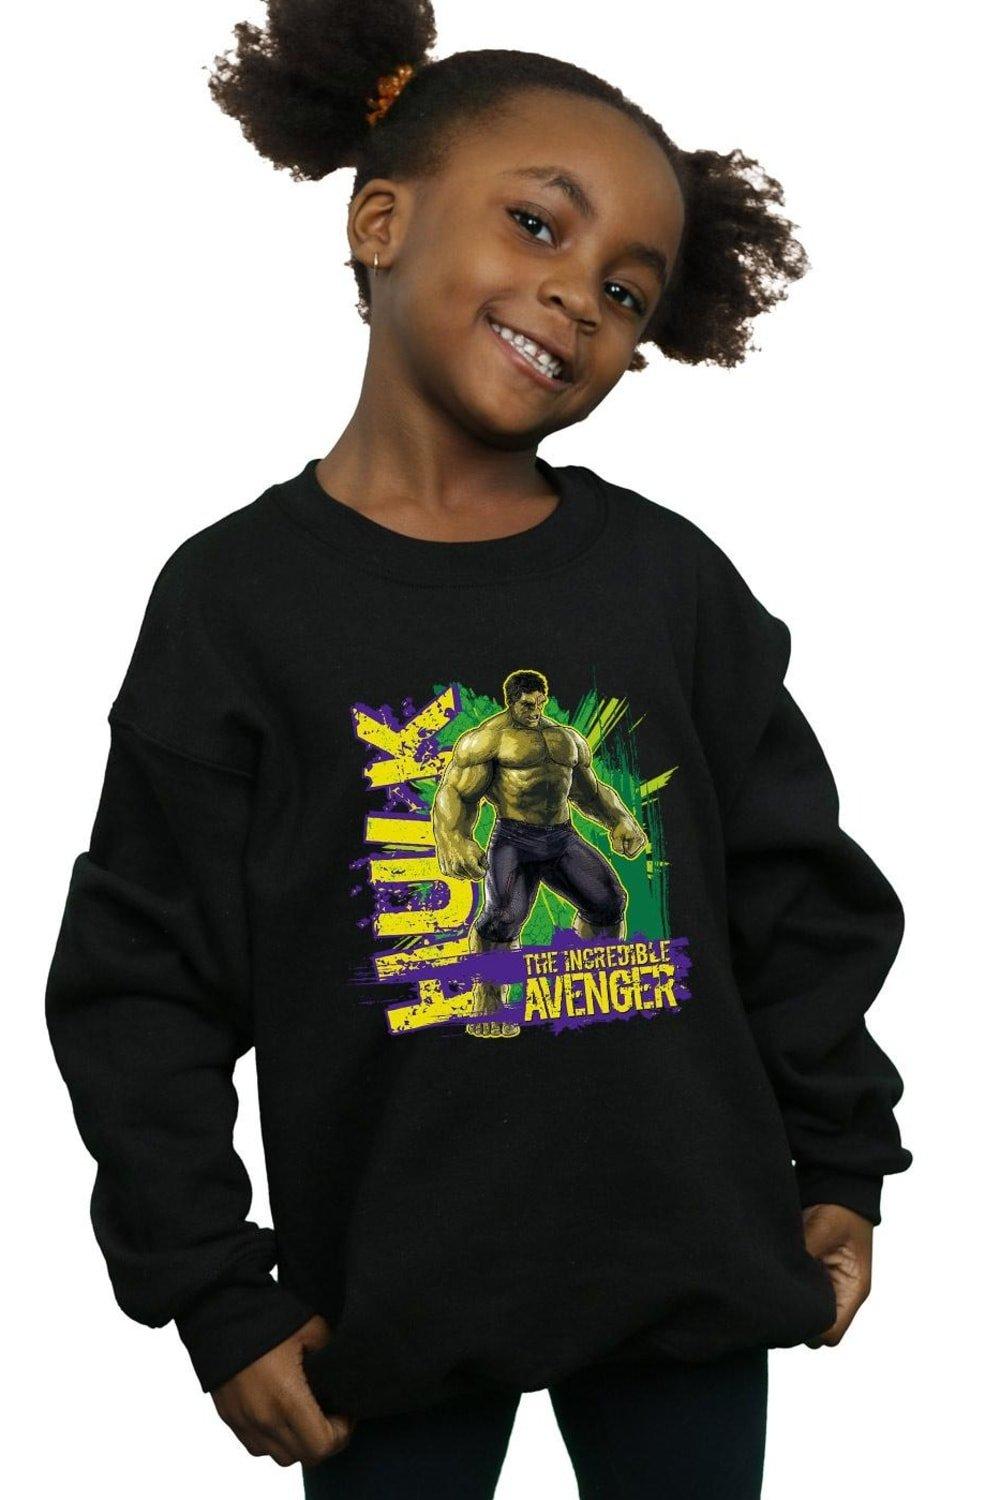 Avengers Hulk Incredible Avenger Sweatshirt